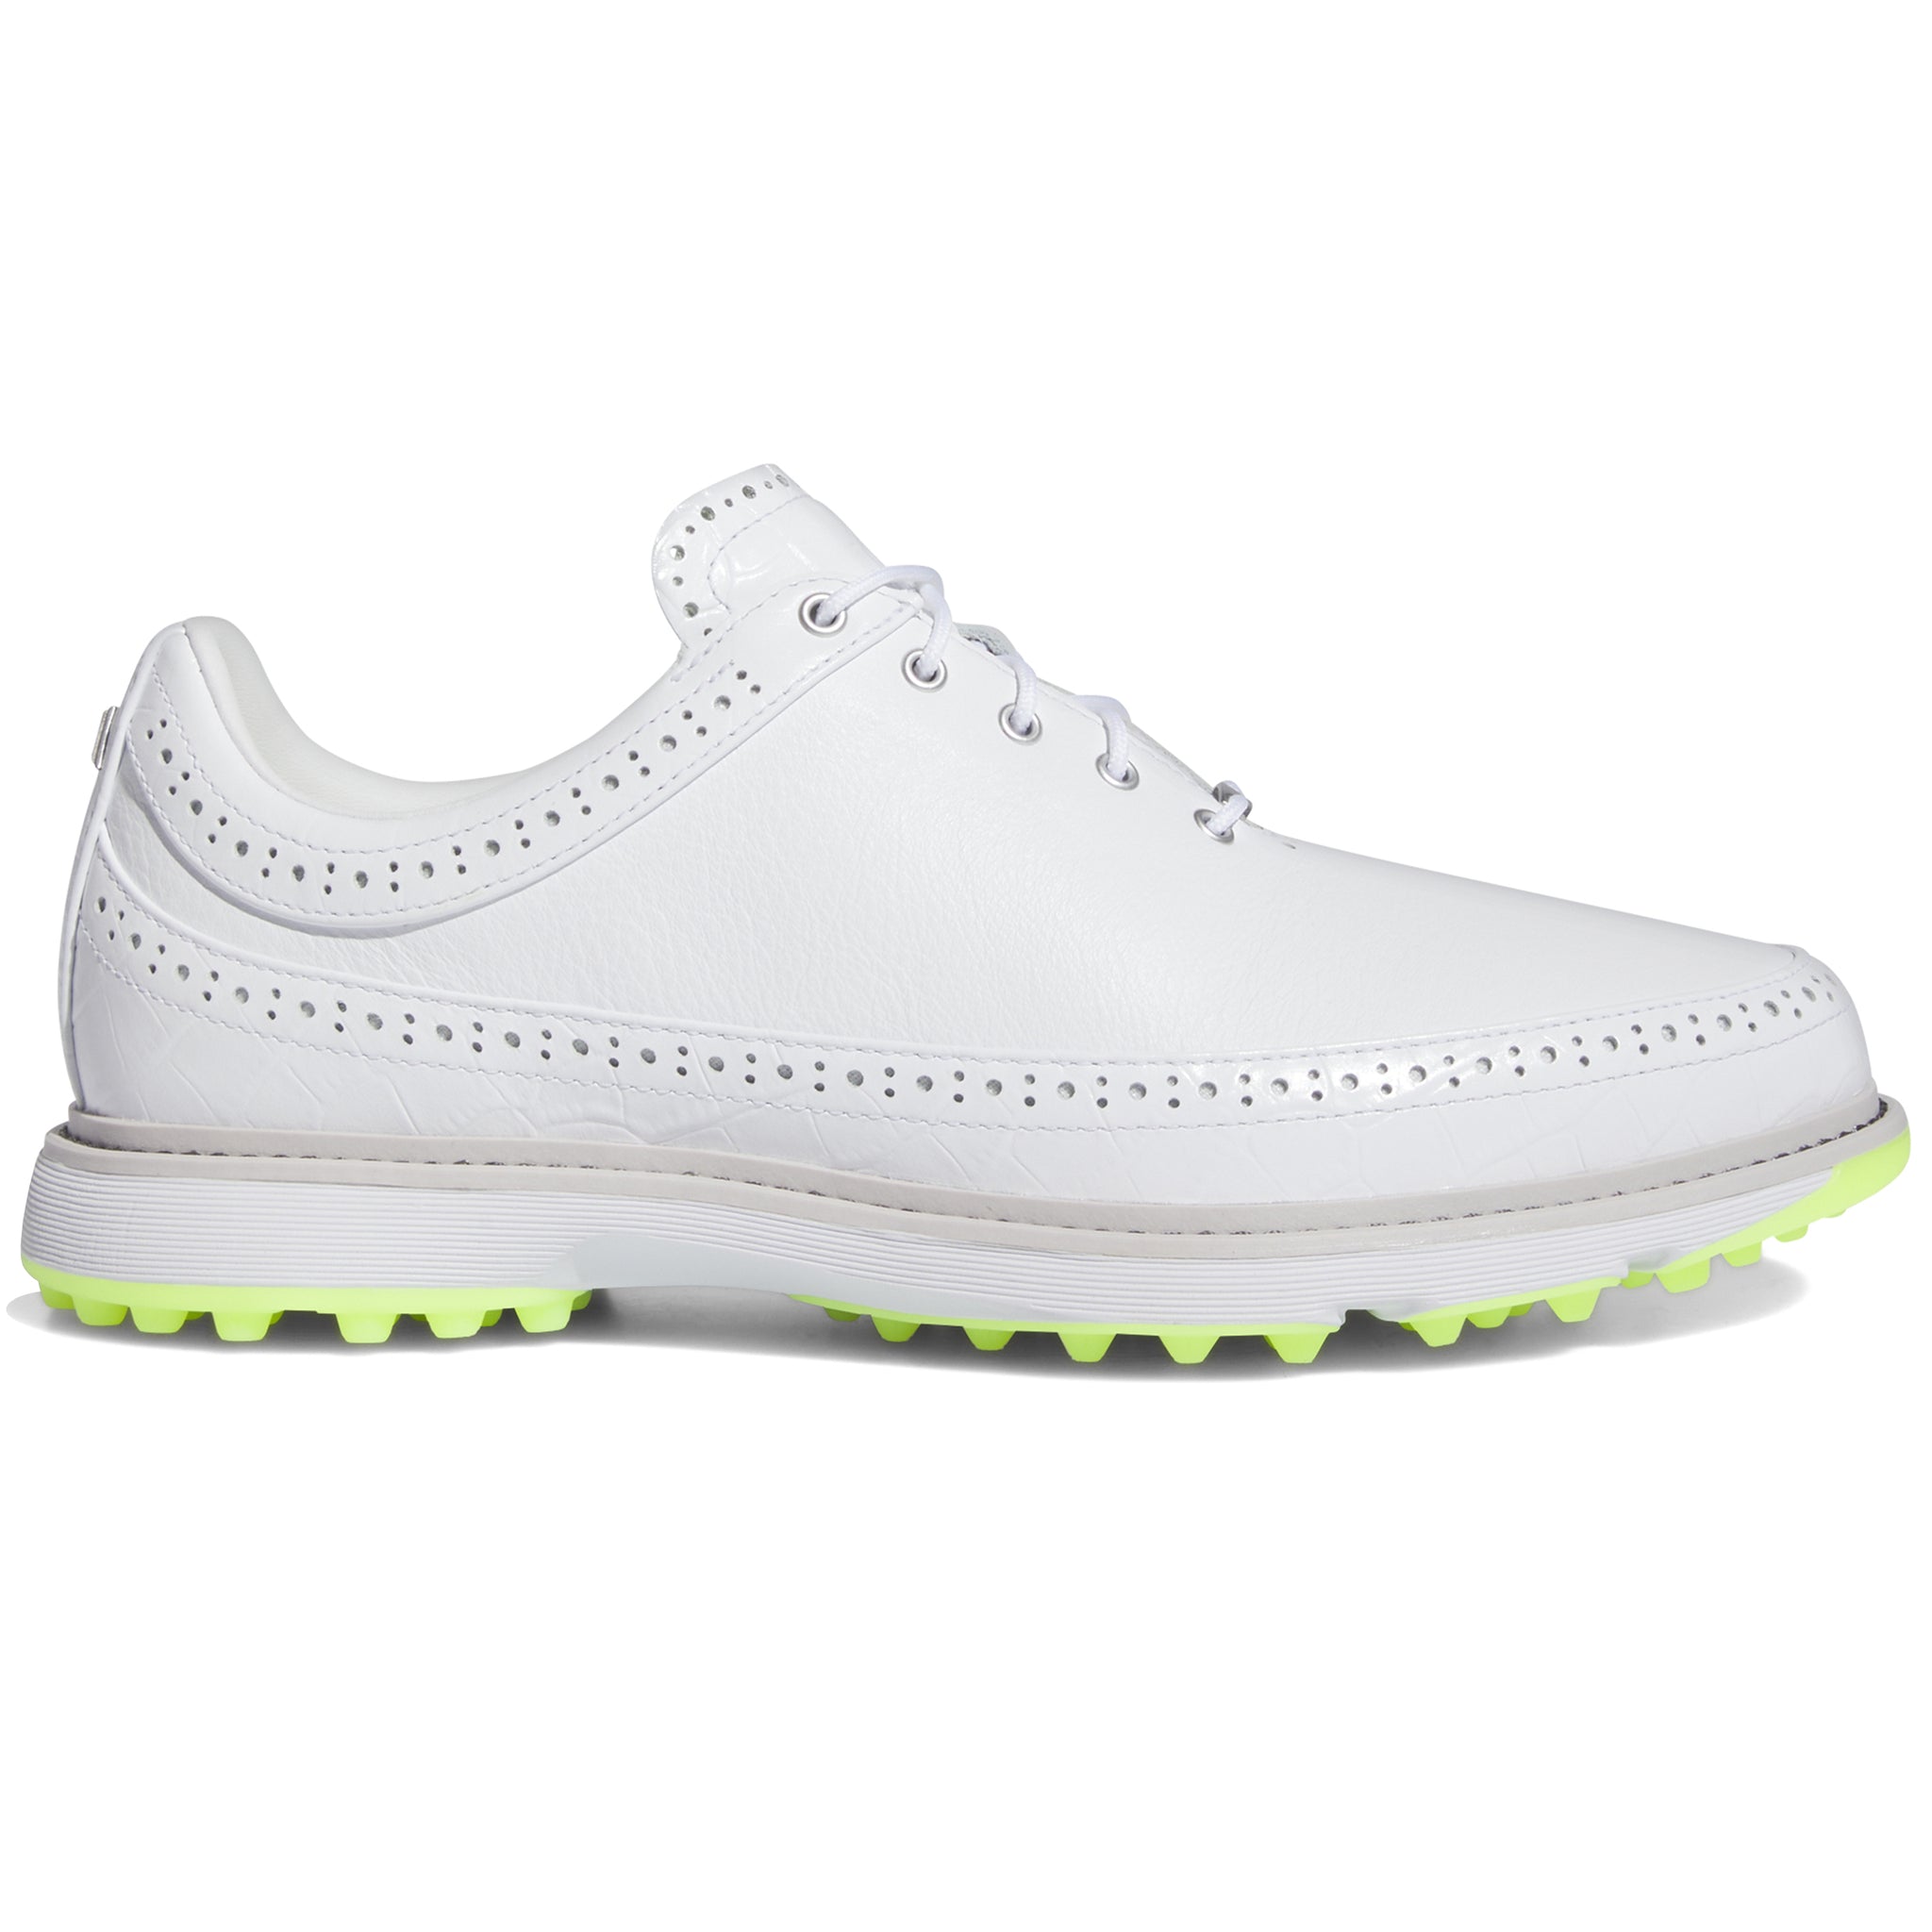 adidas-mc80-golf-shoes-id4748-white-silver-lucid-lemon